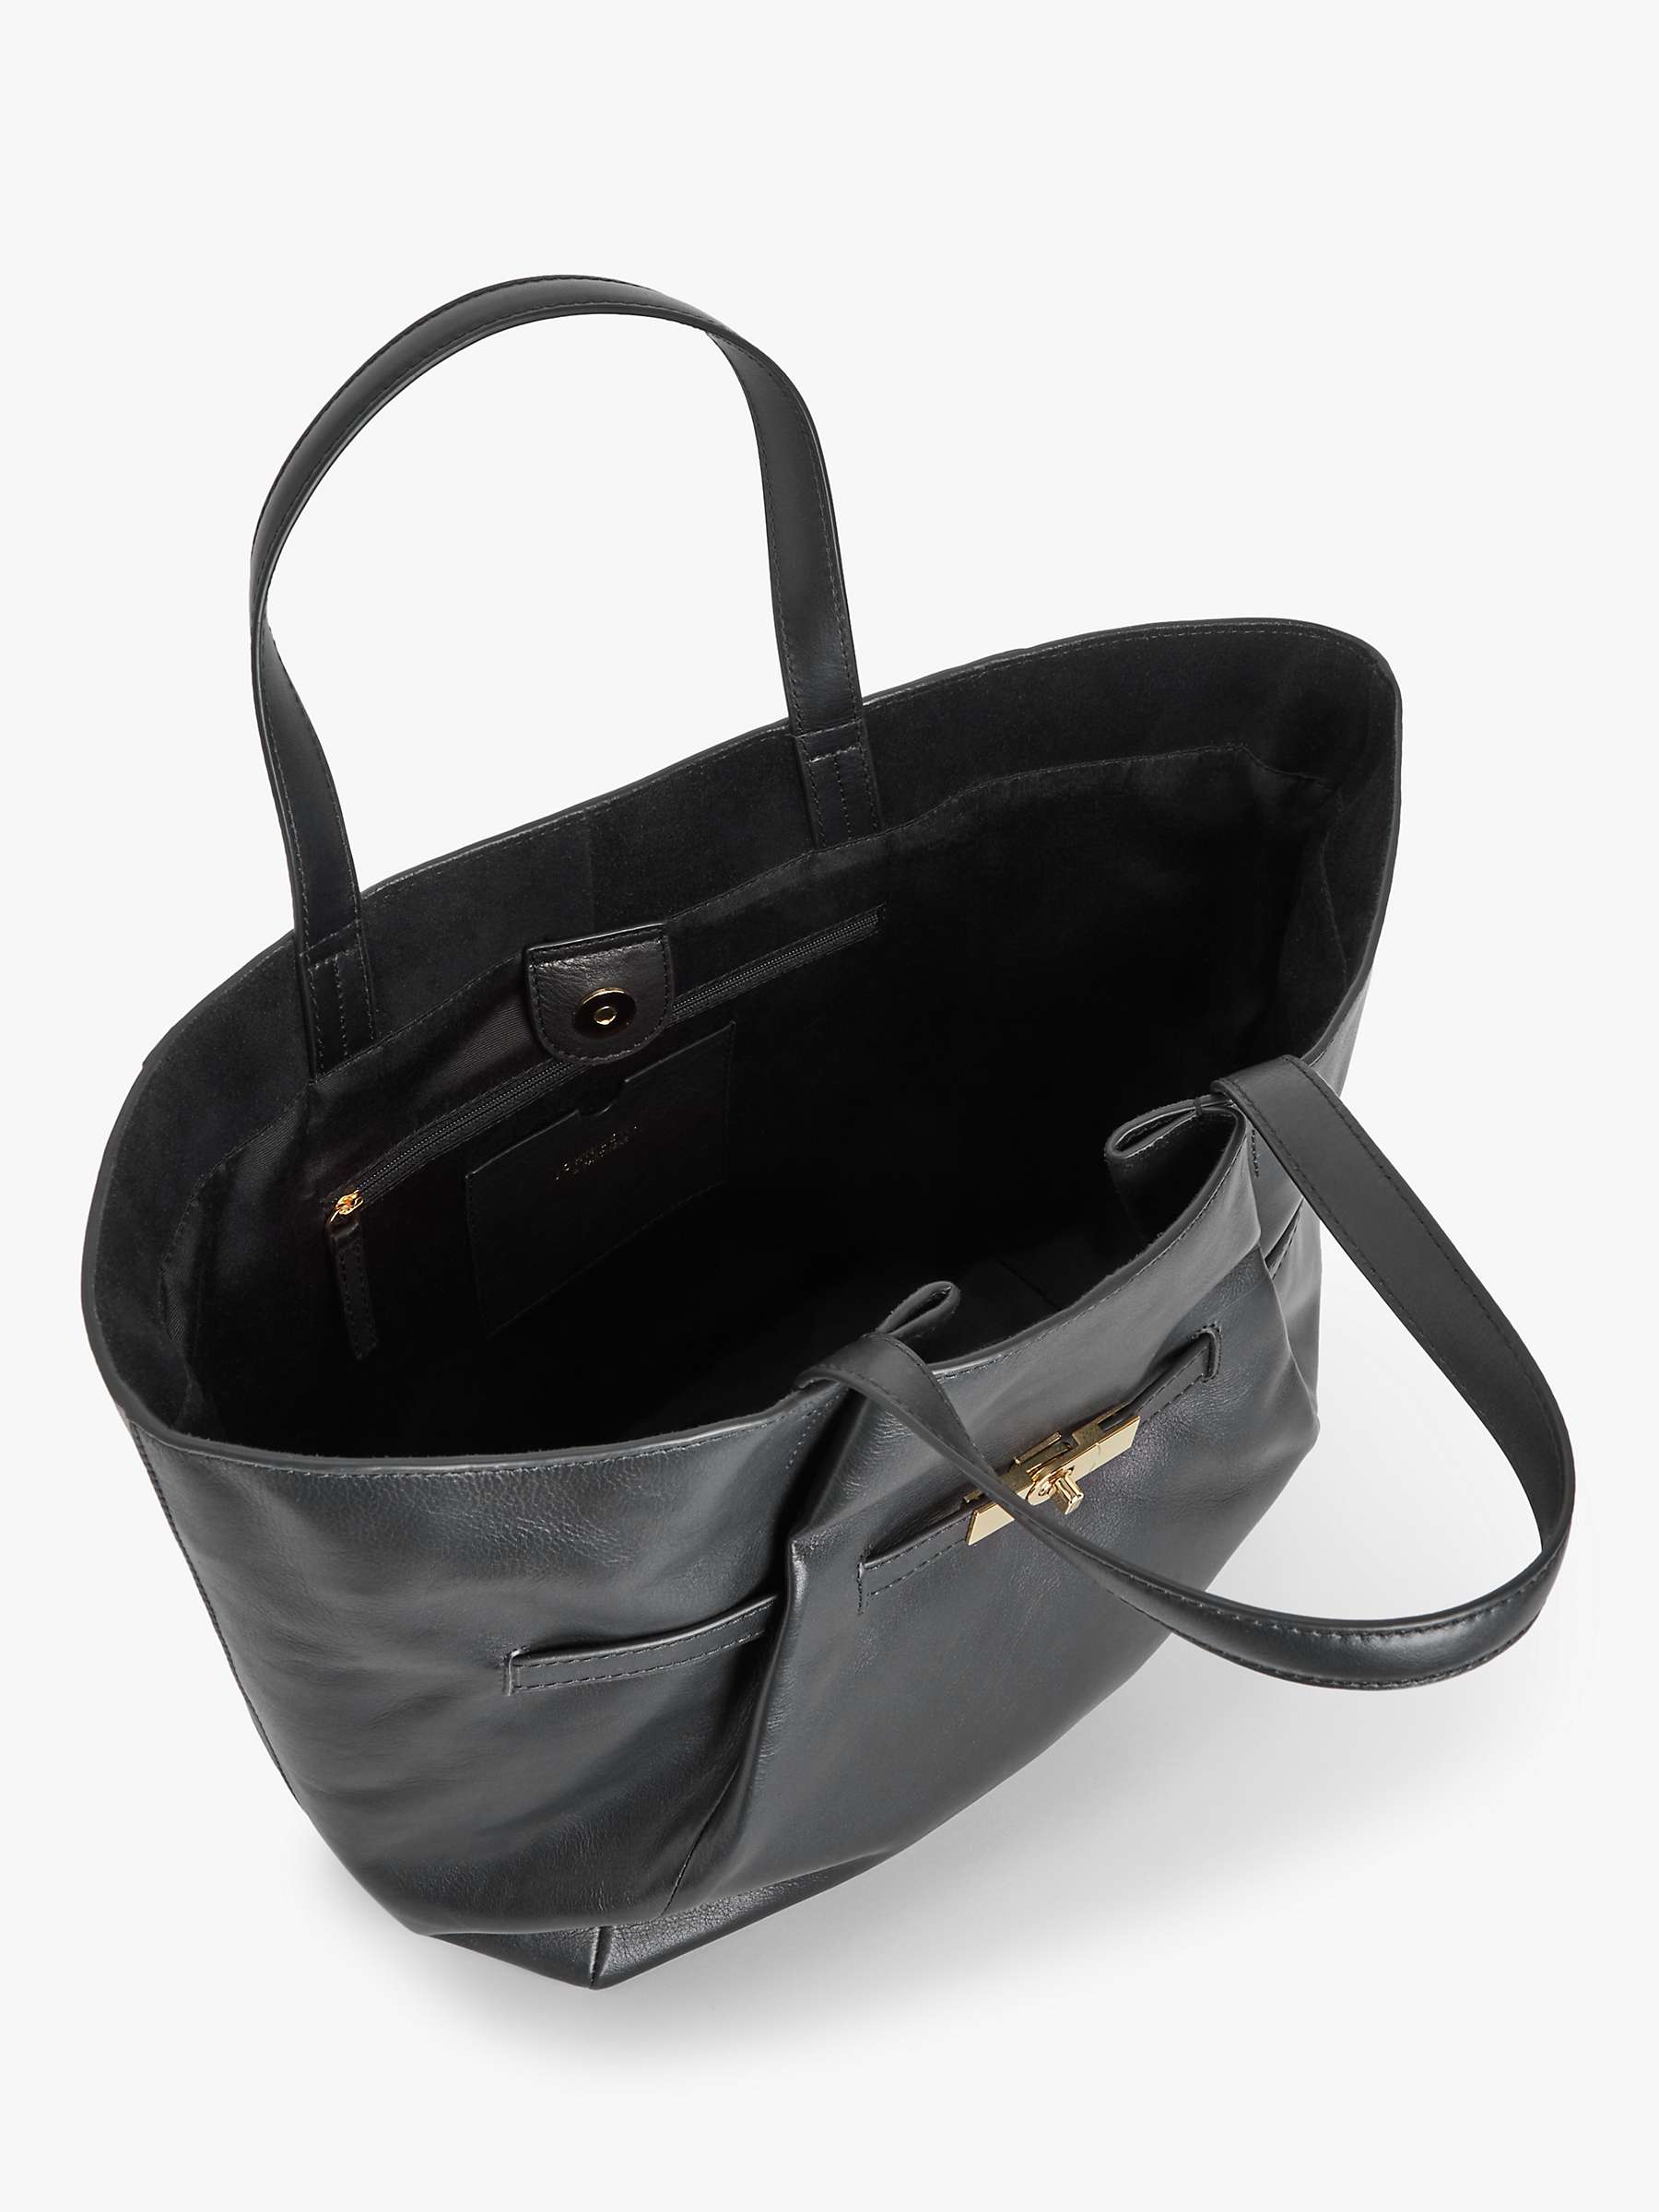 Buy John Lewis Pleat Leather Tote Bag Online at johnlewis.com